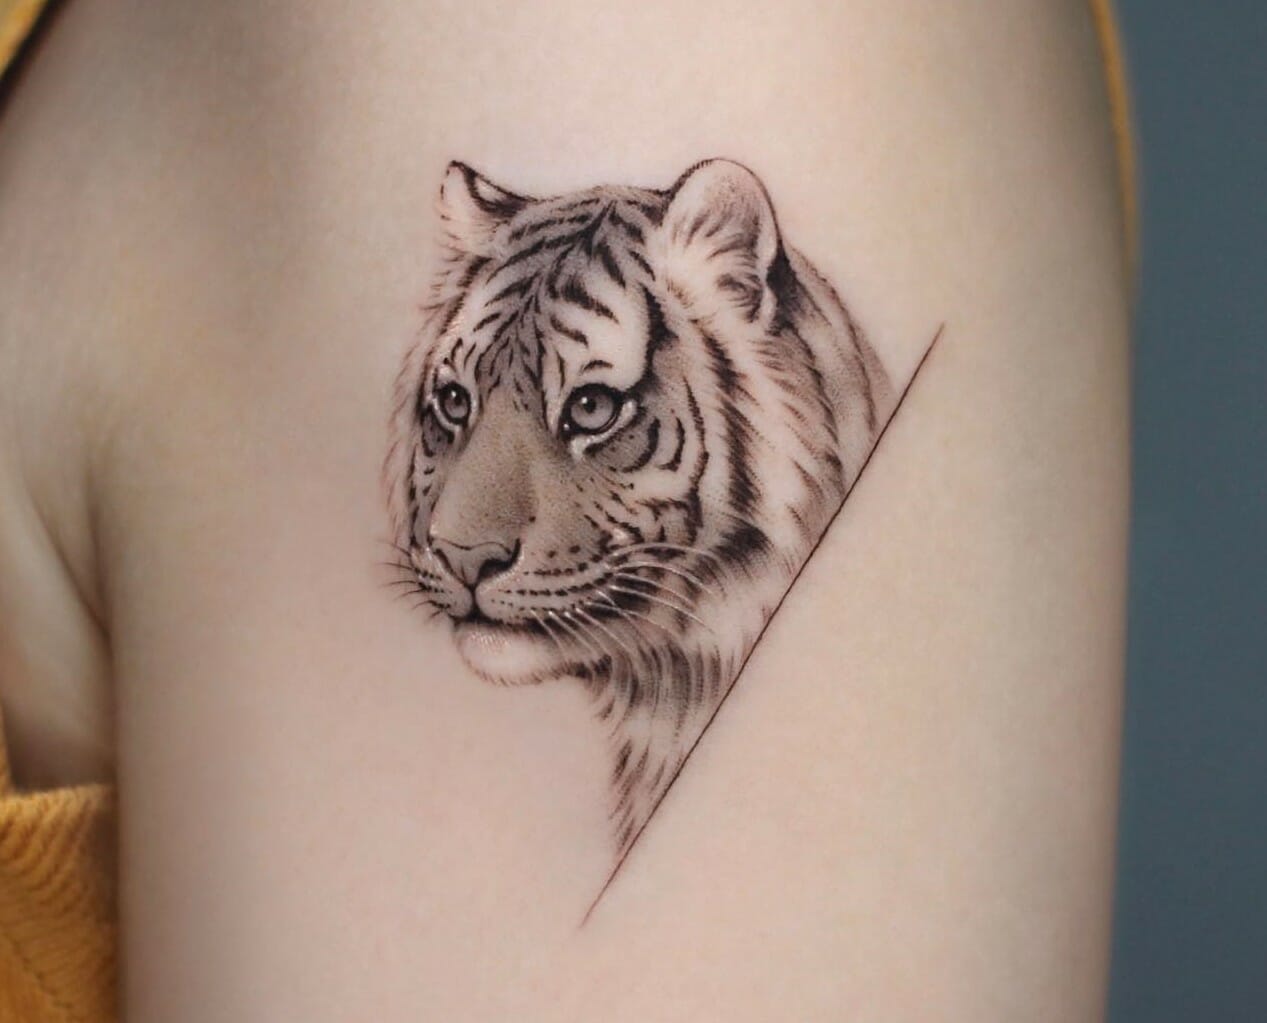 Temporary Tattoos Large Arm Sleeve Tattoo Tiger Moon Flame Waterproof  Temporary Tatto Sticker Lion Body Art Full Fake Tatoo Women Men X0724 From  Konig_albert, $12.9 | DHgate.Com